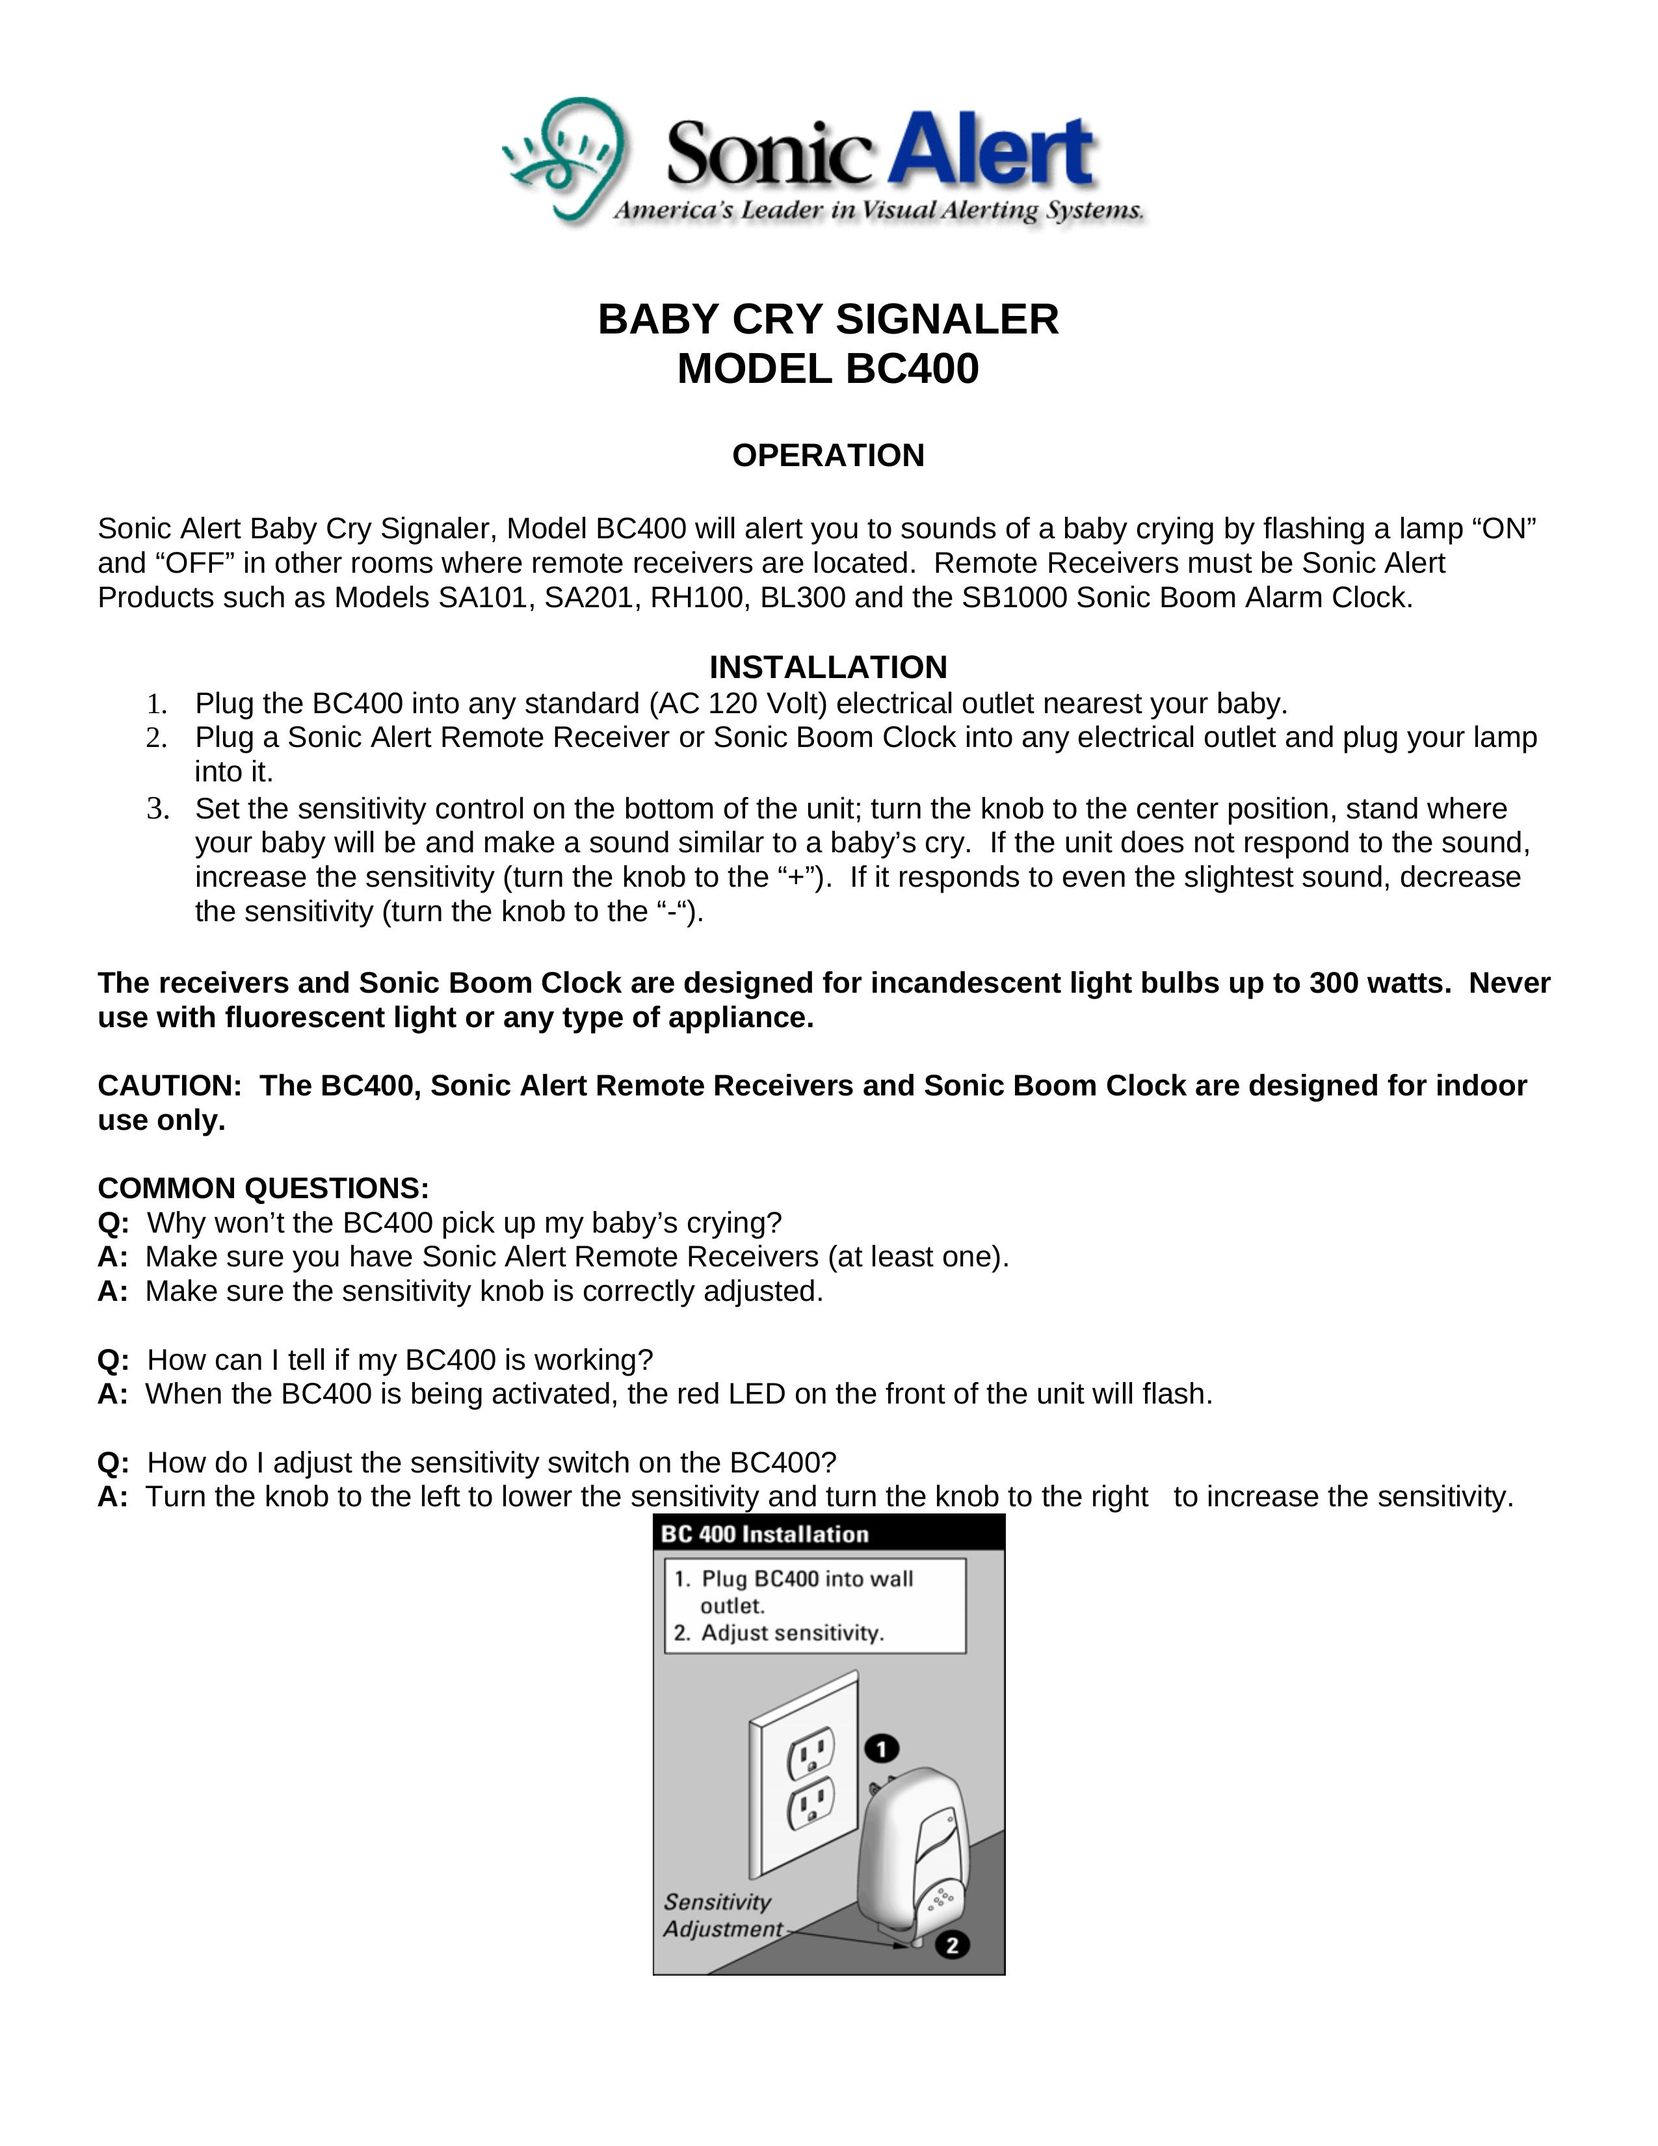 Sonic Alert RH100 Baby Monitor User Manual